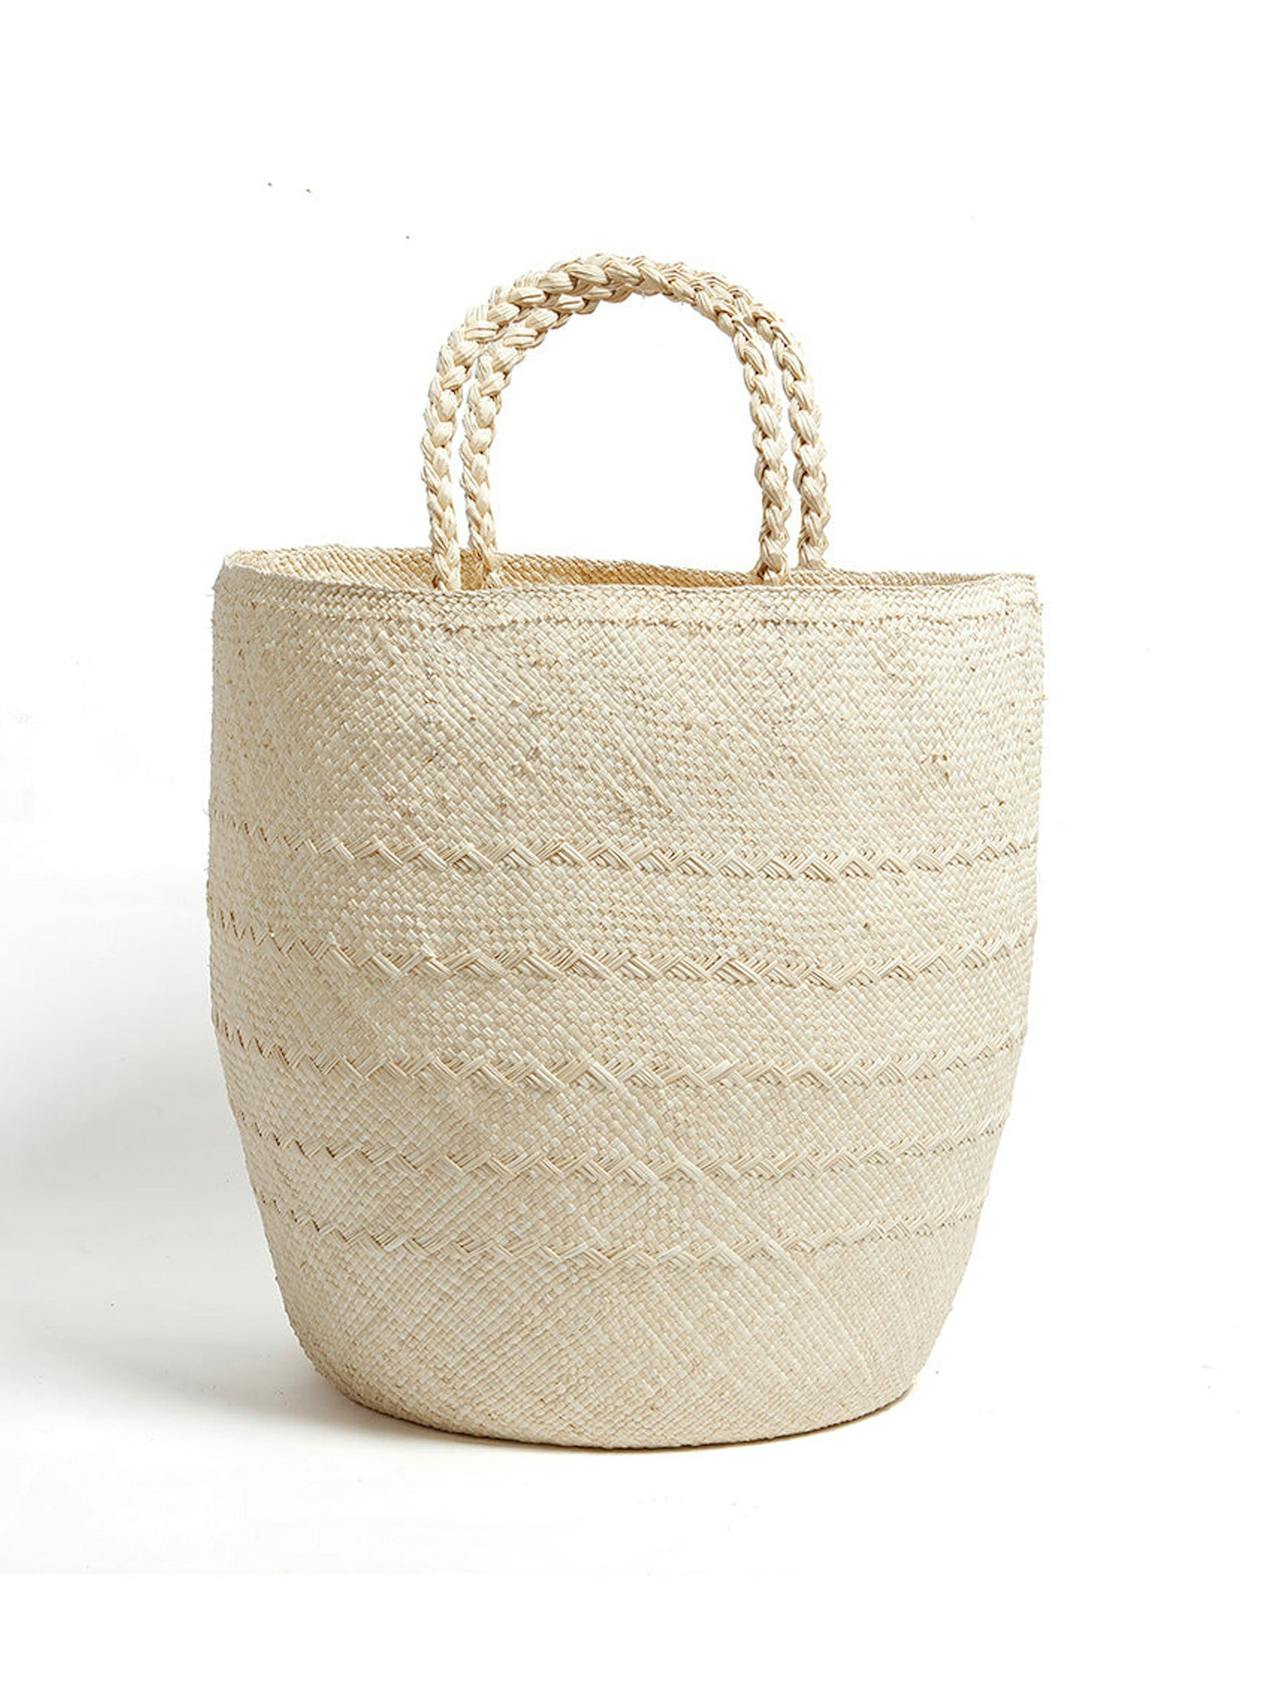 Bridget large woven basket